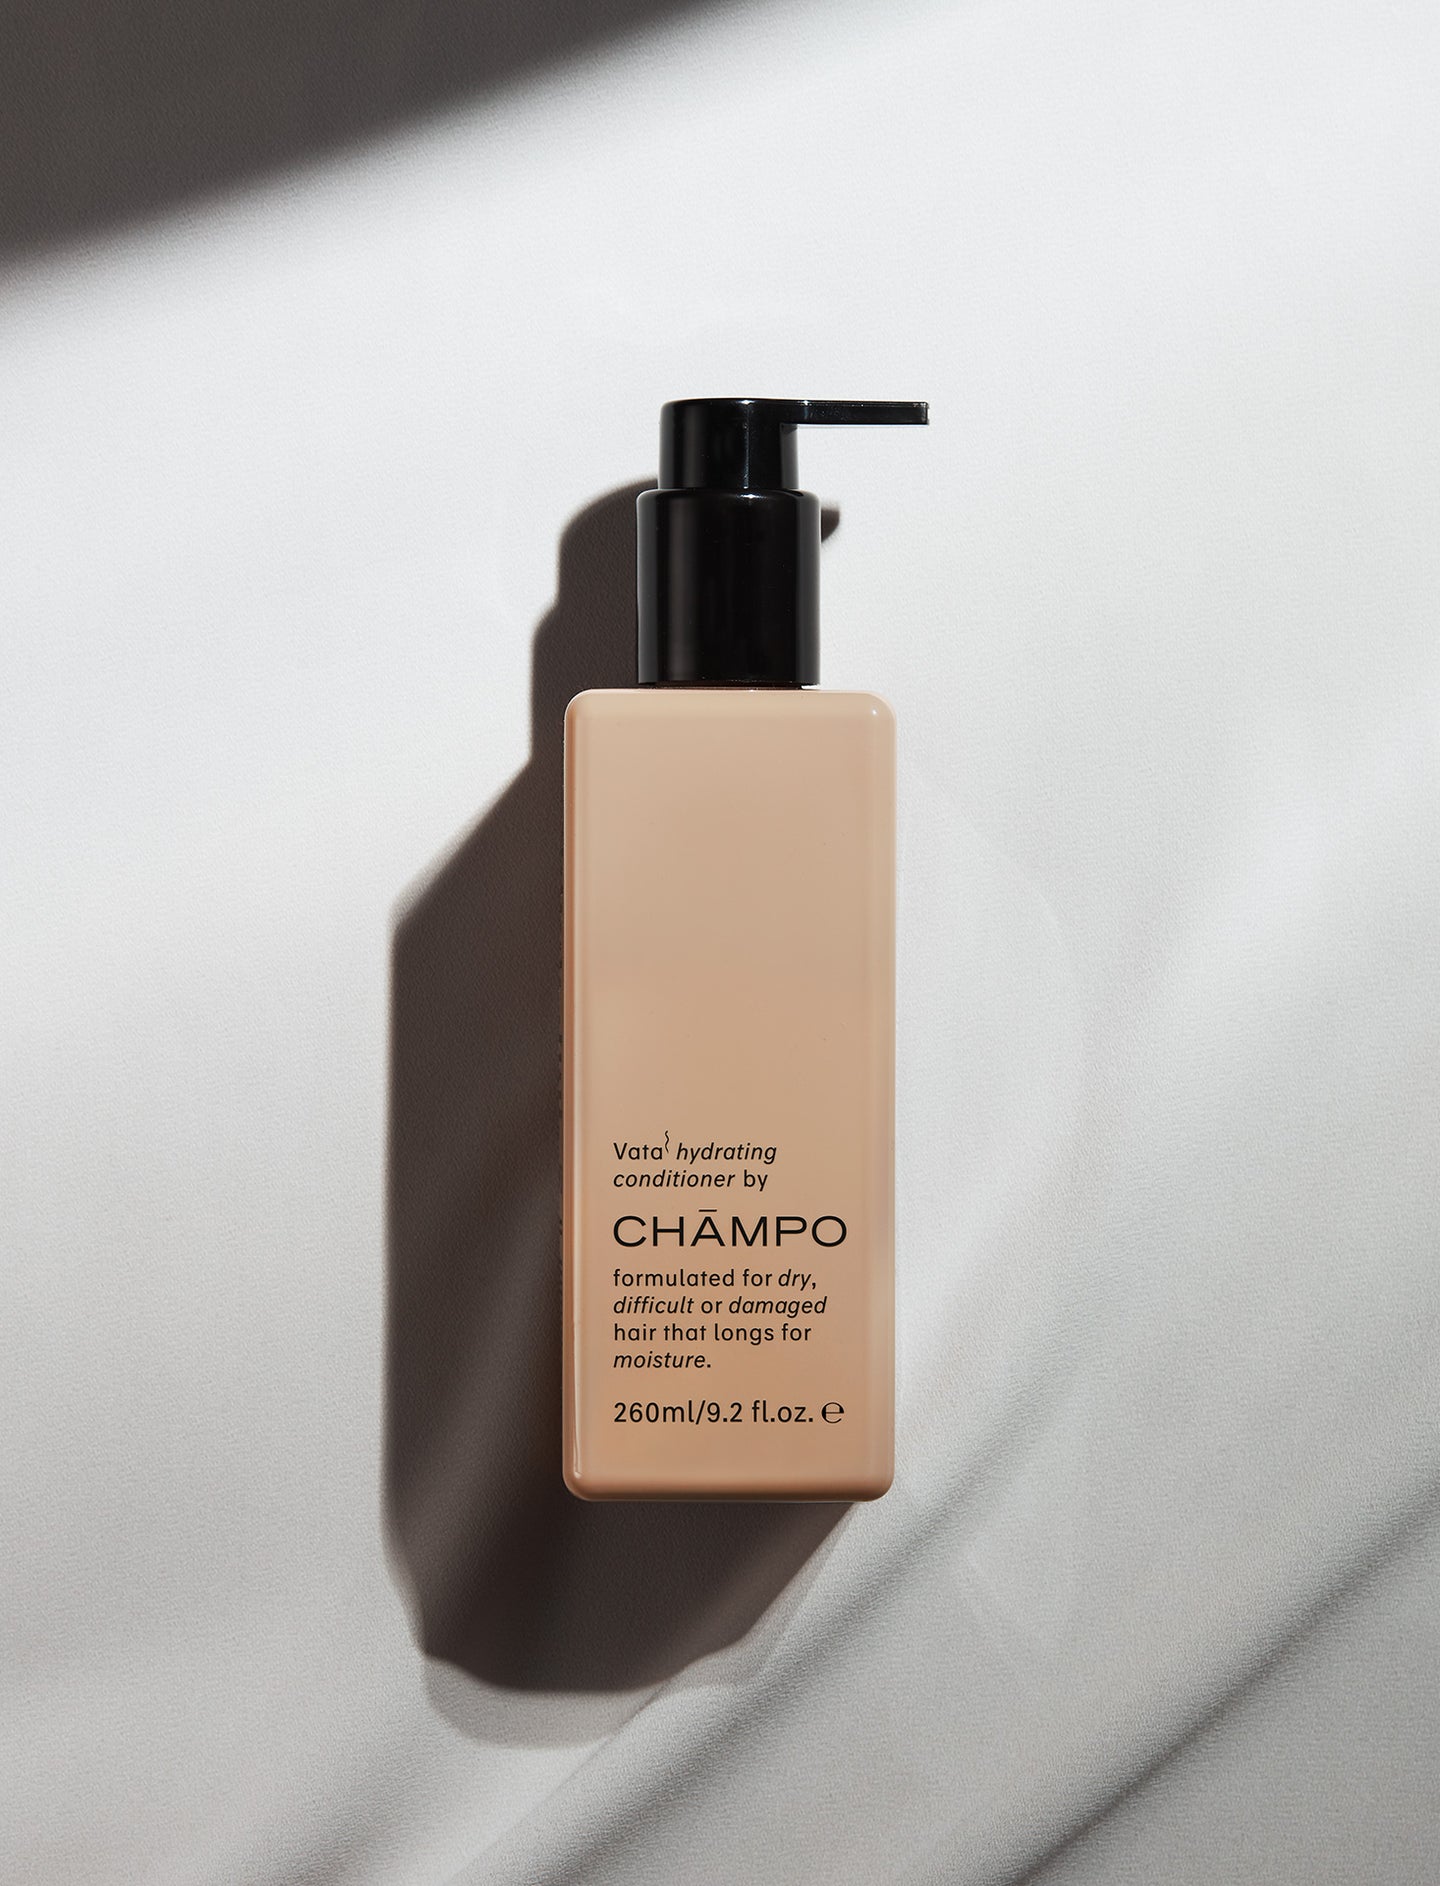 Vata Hydrating shampoo for dry hair by Chāmpo